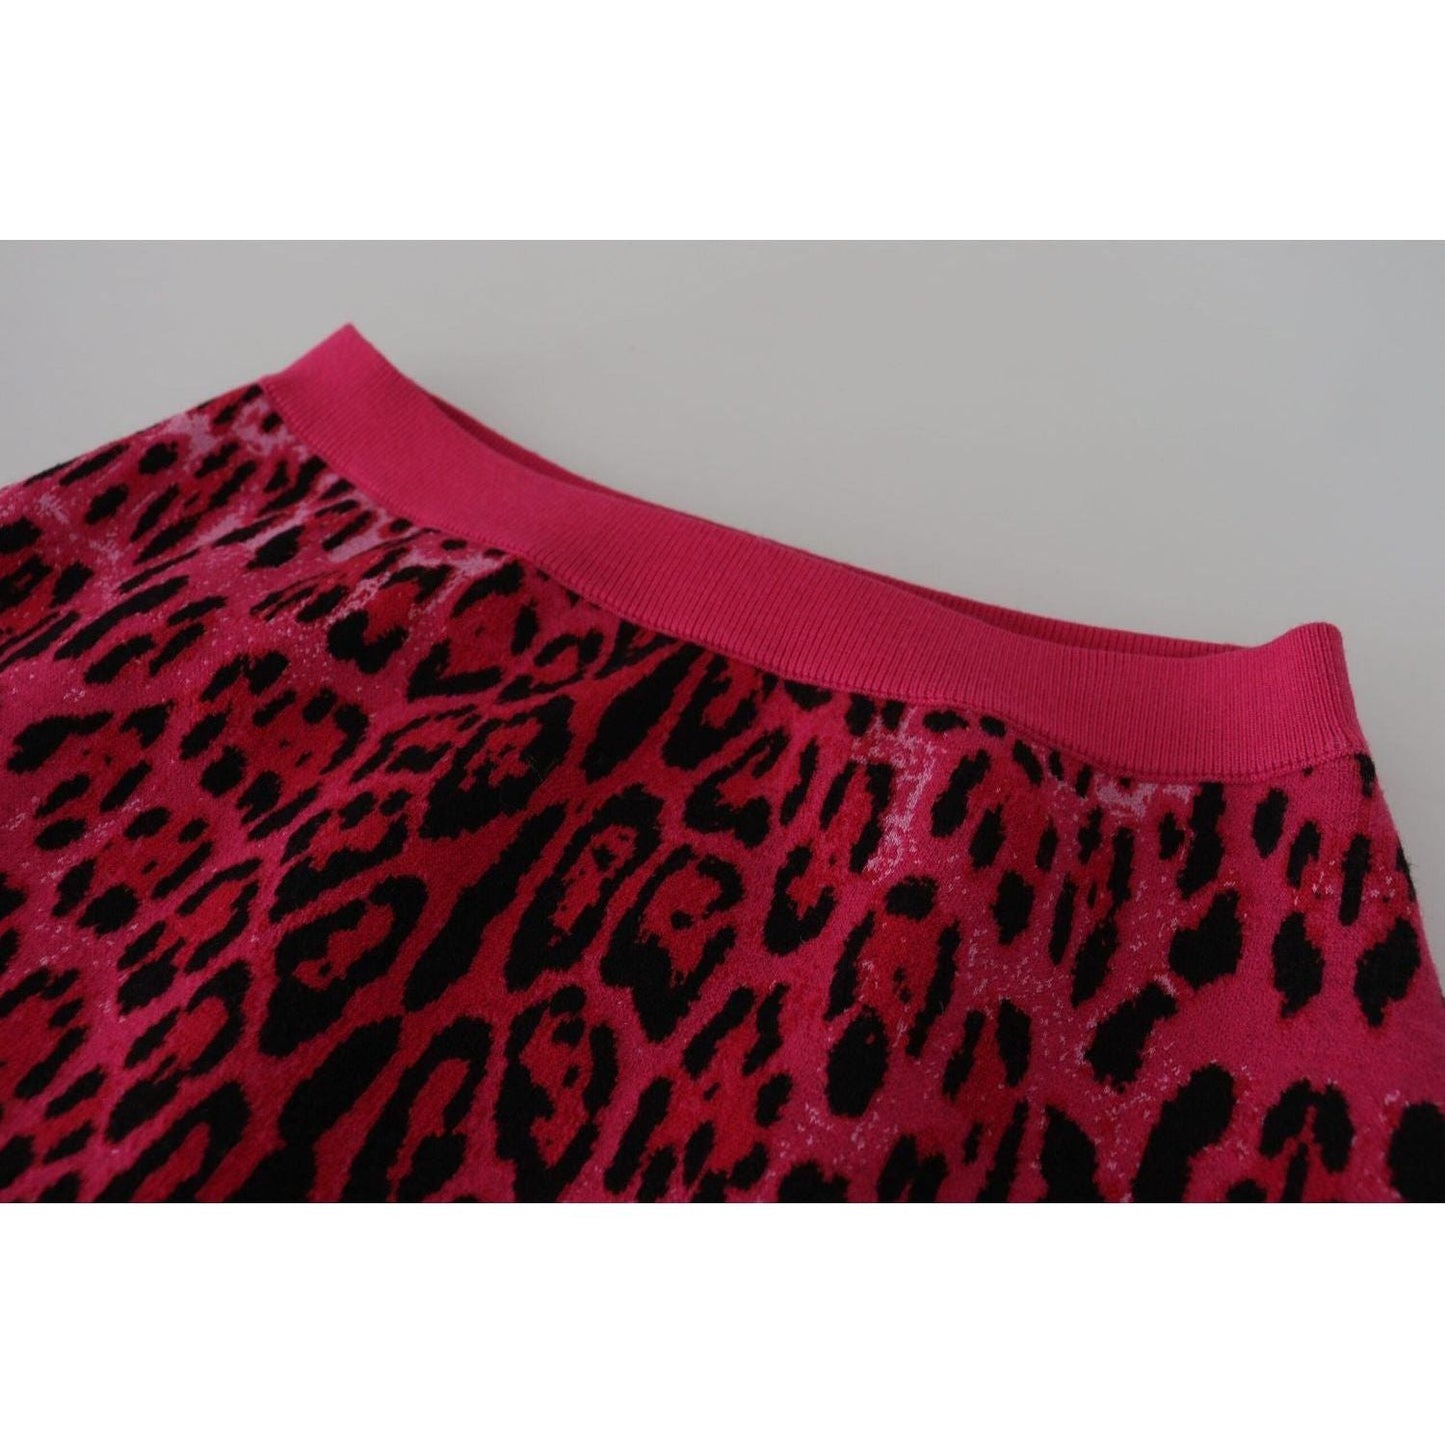 Dolce & Gabbana Chic High Waist Pink Leopard Mini Skirt pink-leopard-high-waist-a-line-mini-skirt IMG_3343-scaled-c473f369-4ea.jpg